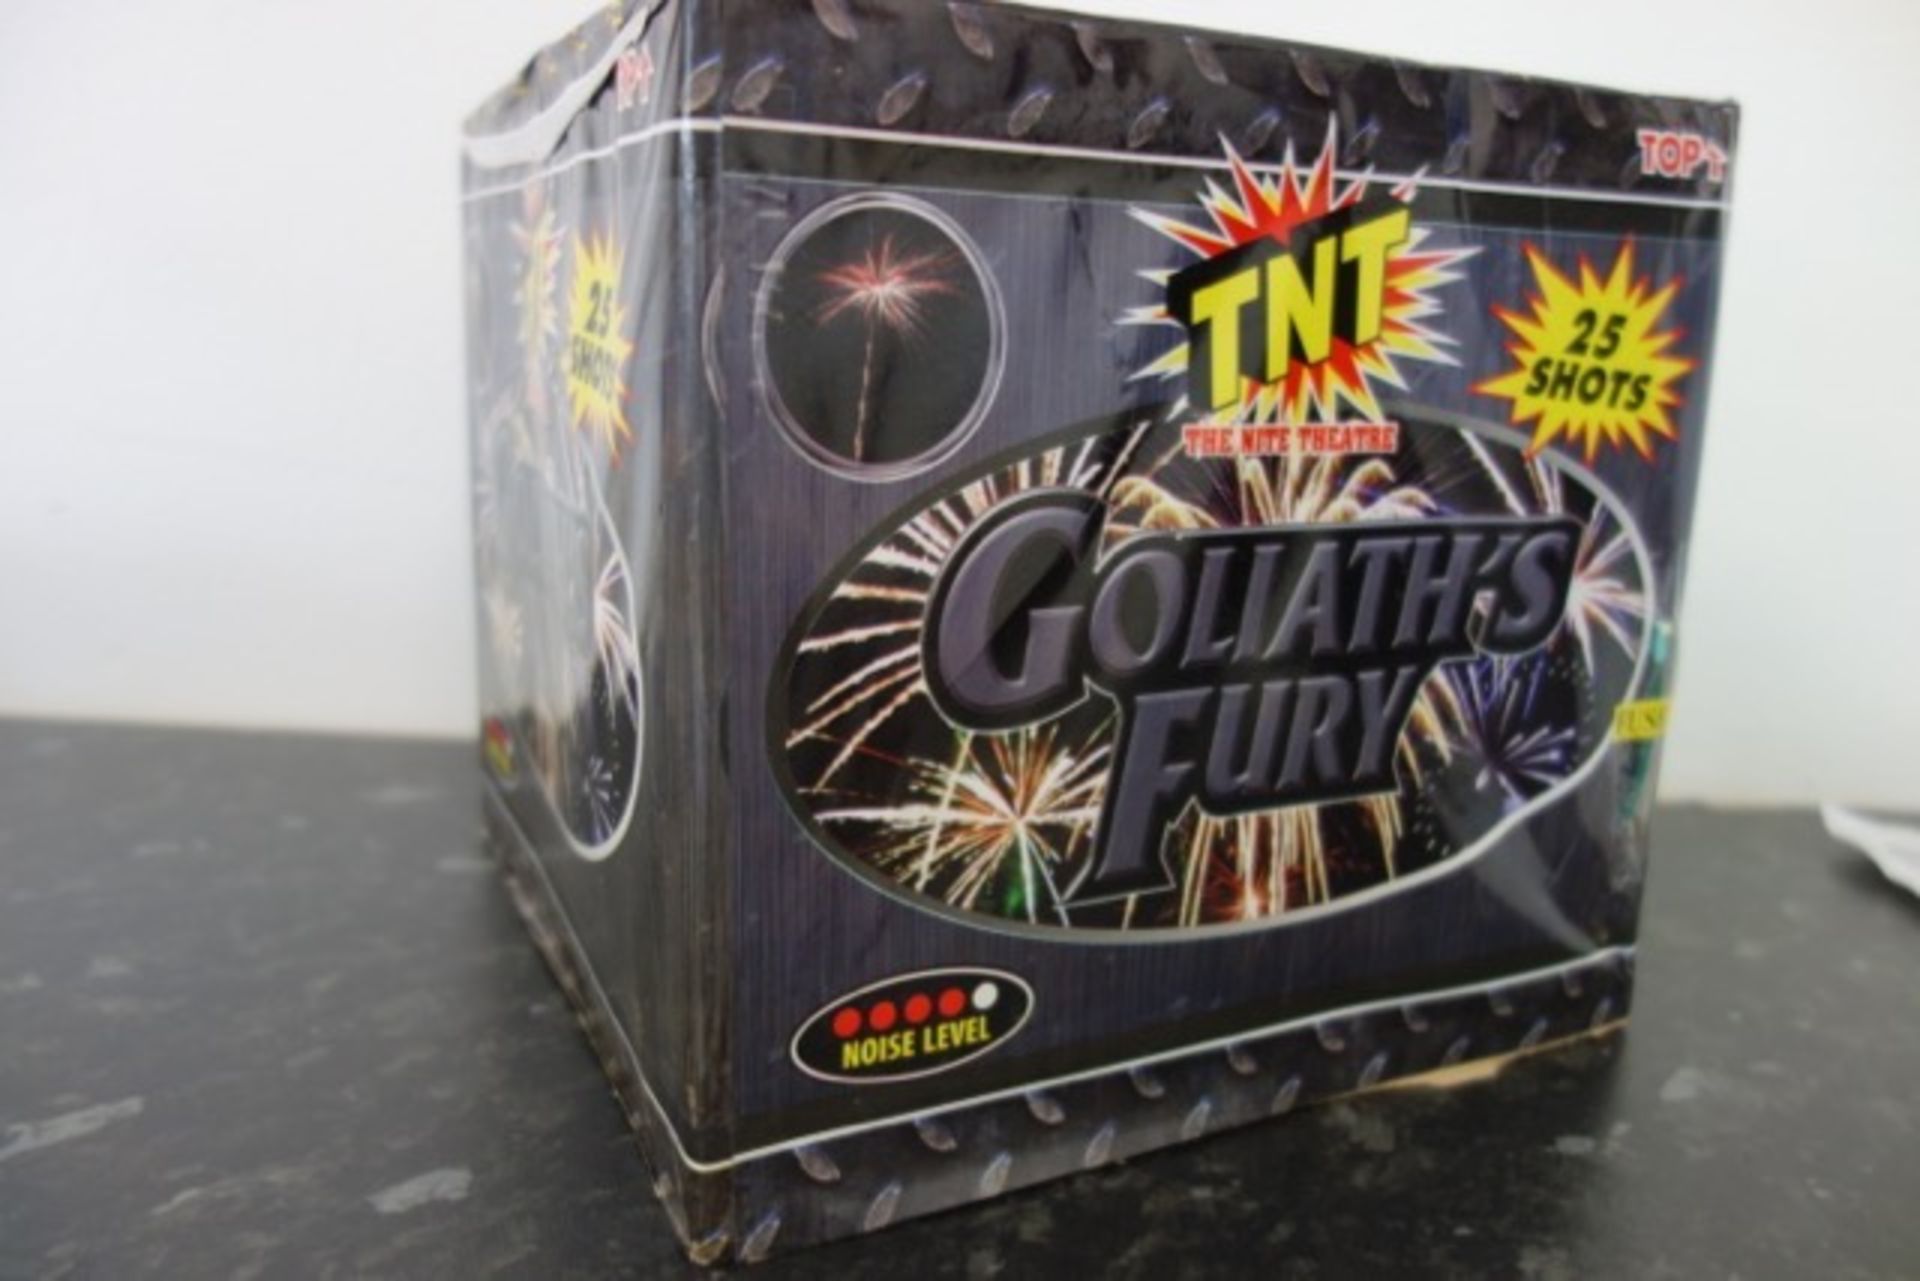 2 x TNT Goliath's Fury 25 Shot Cake - Noise Level 4/5. RRP £49.99 each, total RRP £99.98. Please